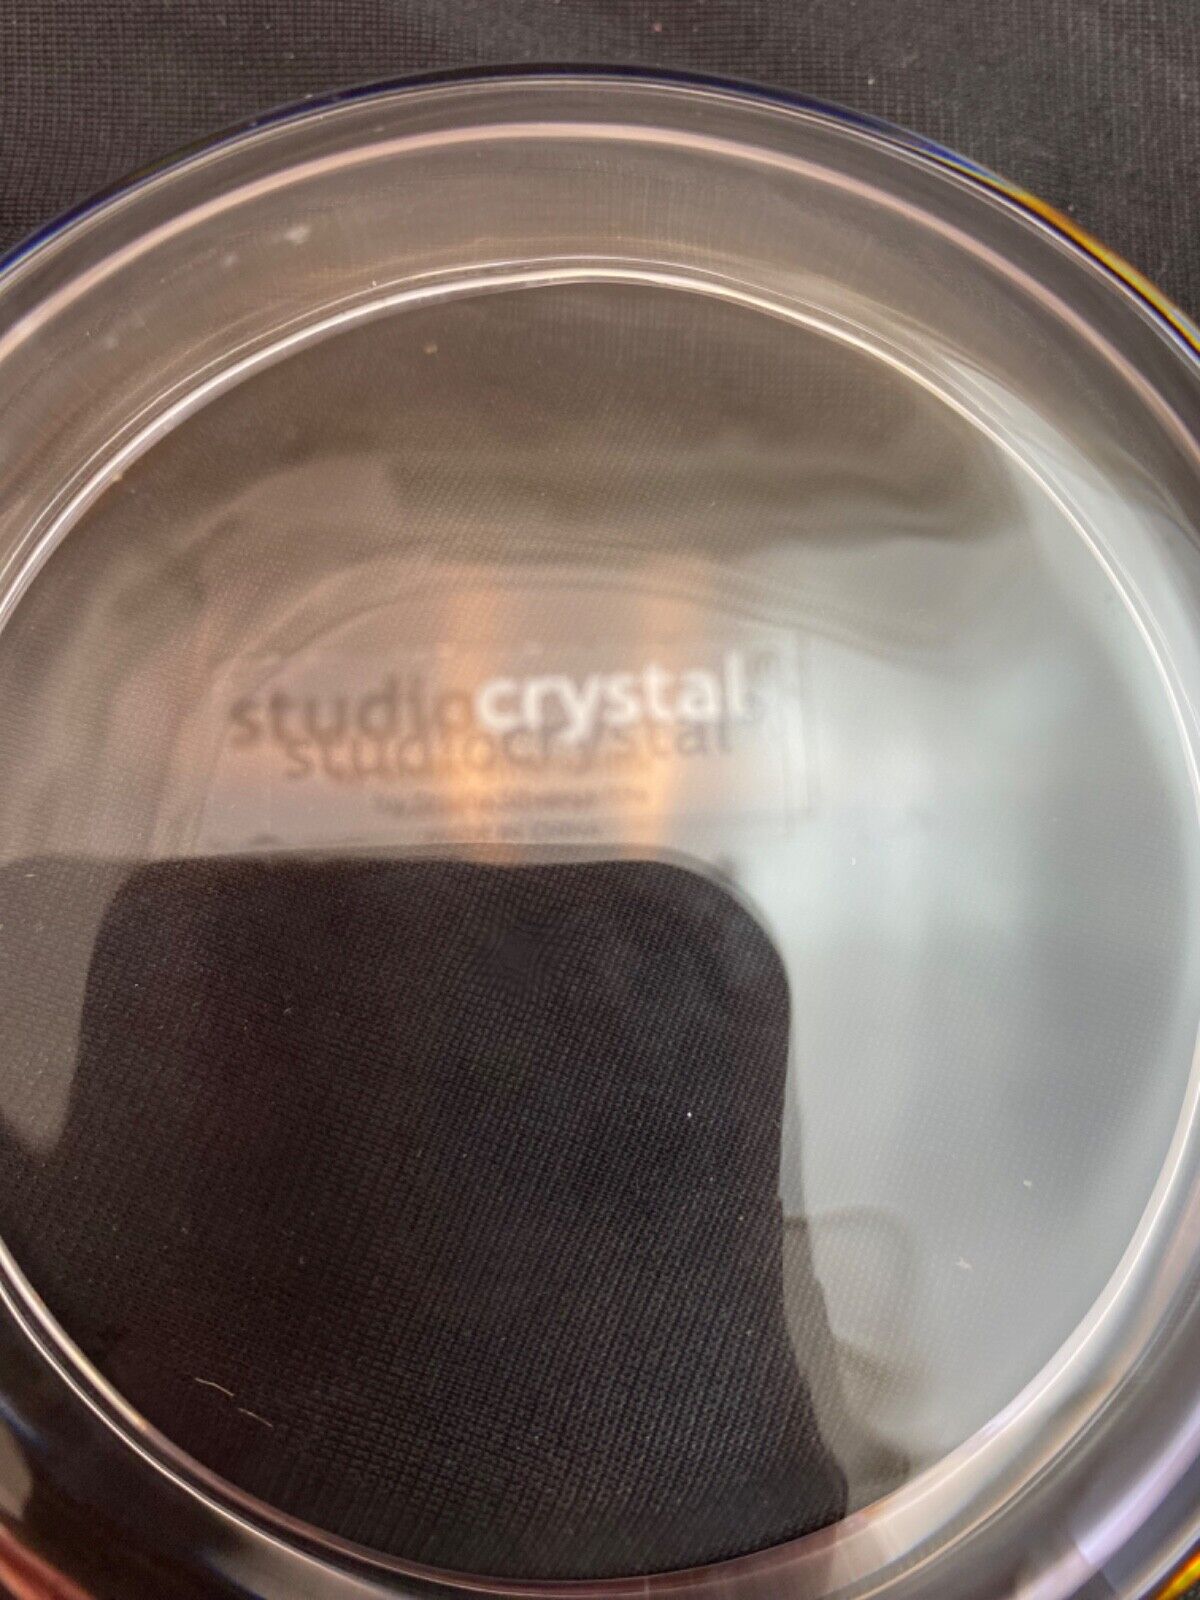 Godinger Studio Crystal Jeweled Covered Trinket Box Без бренда - фотография #7